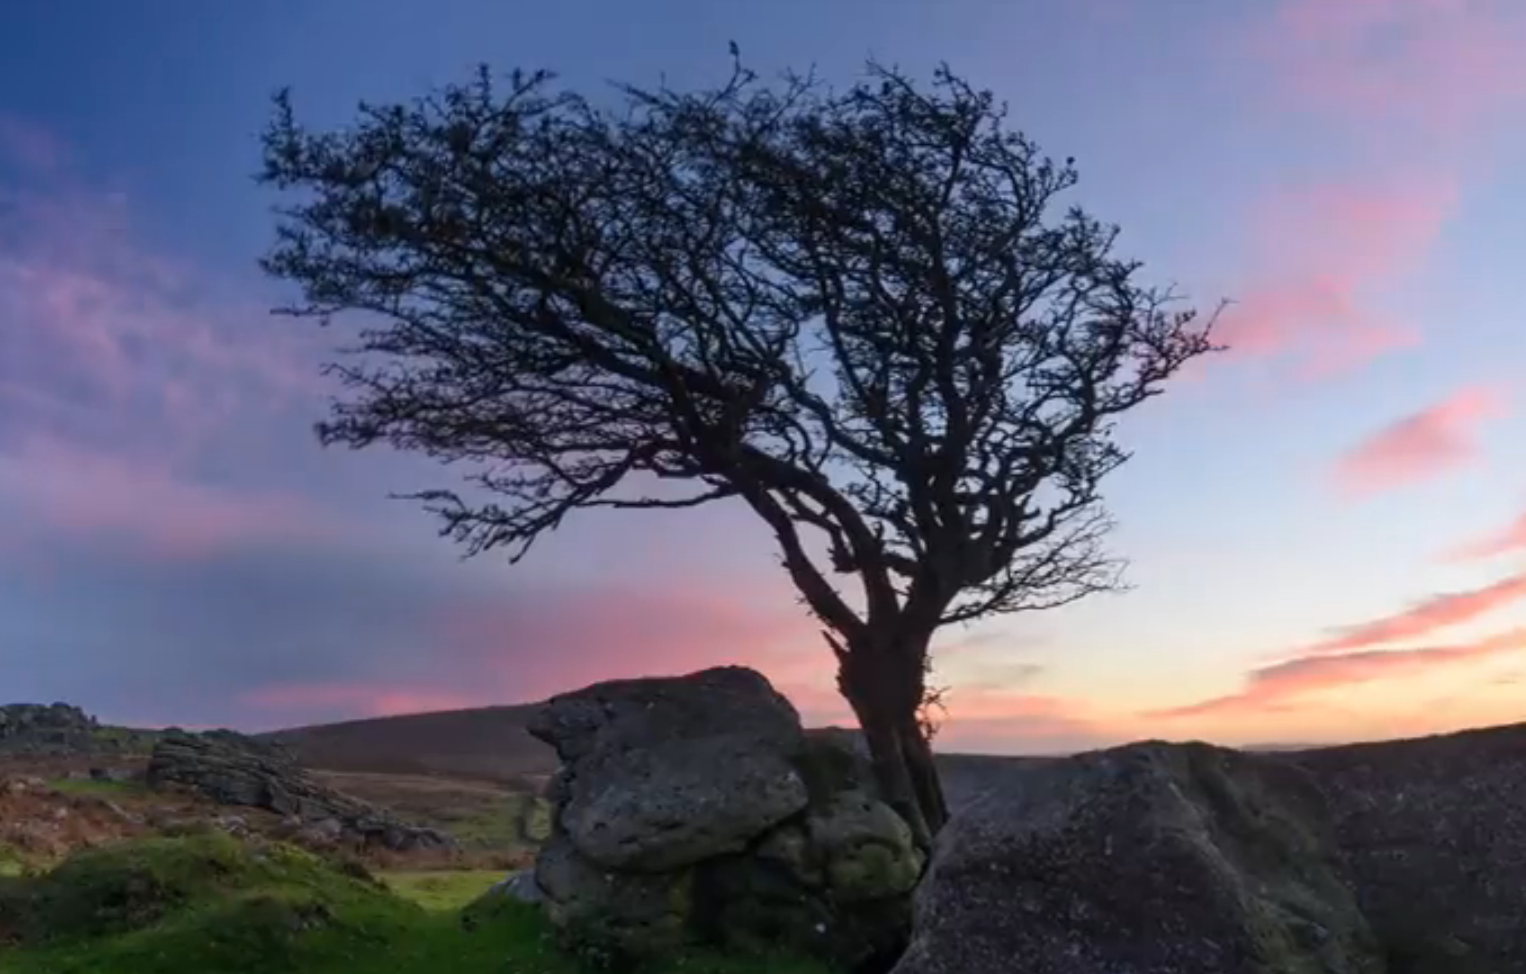 A stunning timelapse over Dartmoor